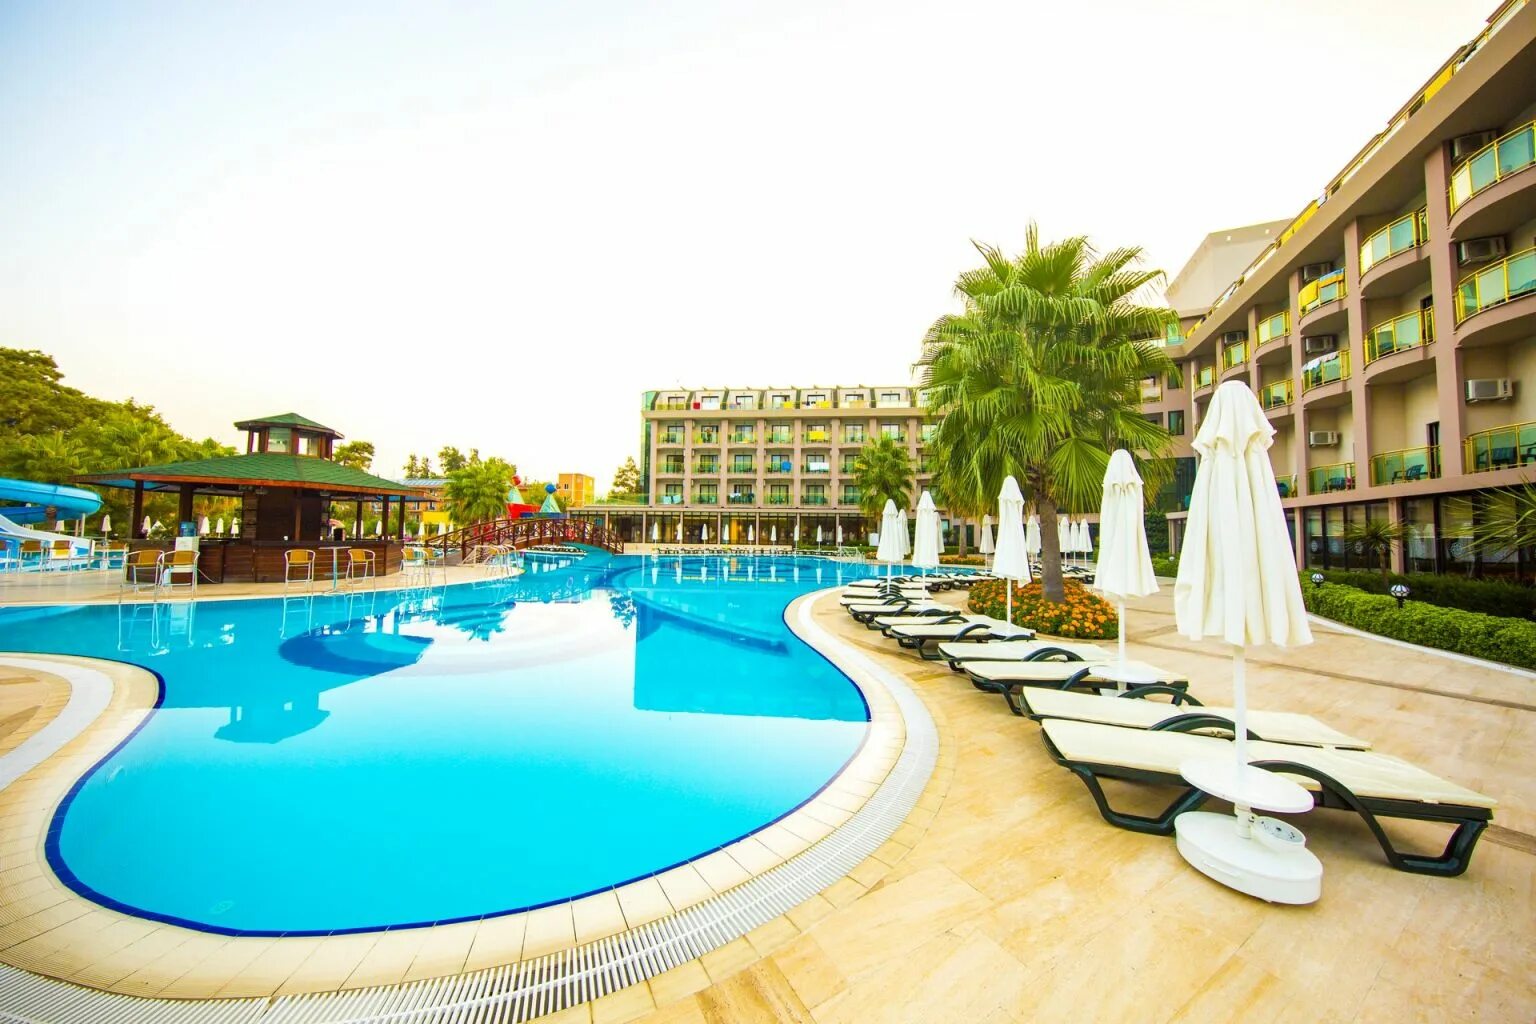 Отель Eldar Resort 4*. Отель Eldar Resort 4 Турция Кемер. Eldar garden hotel кемер